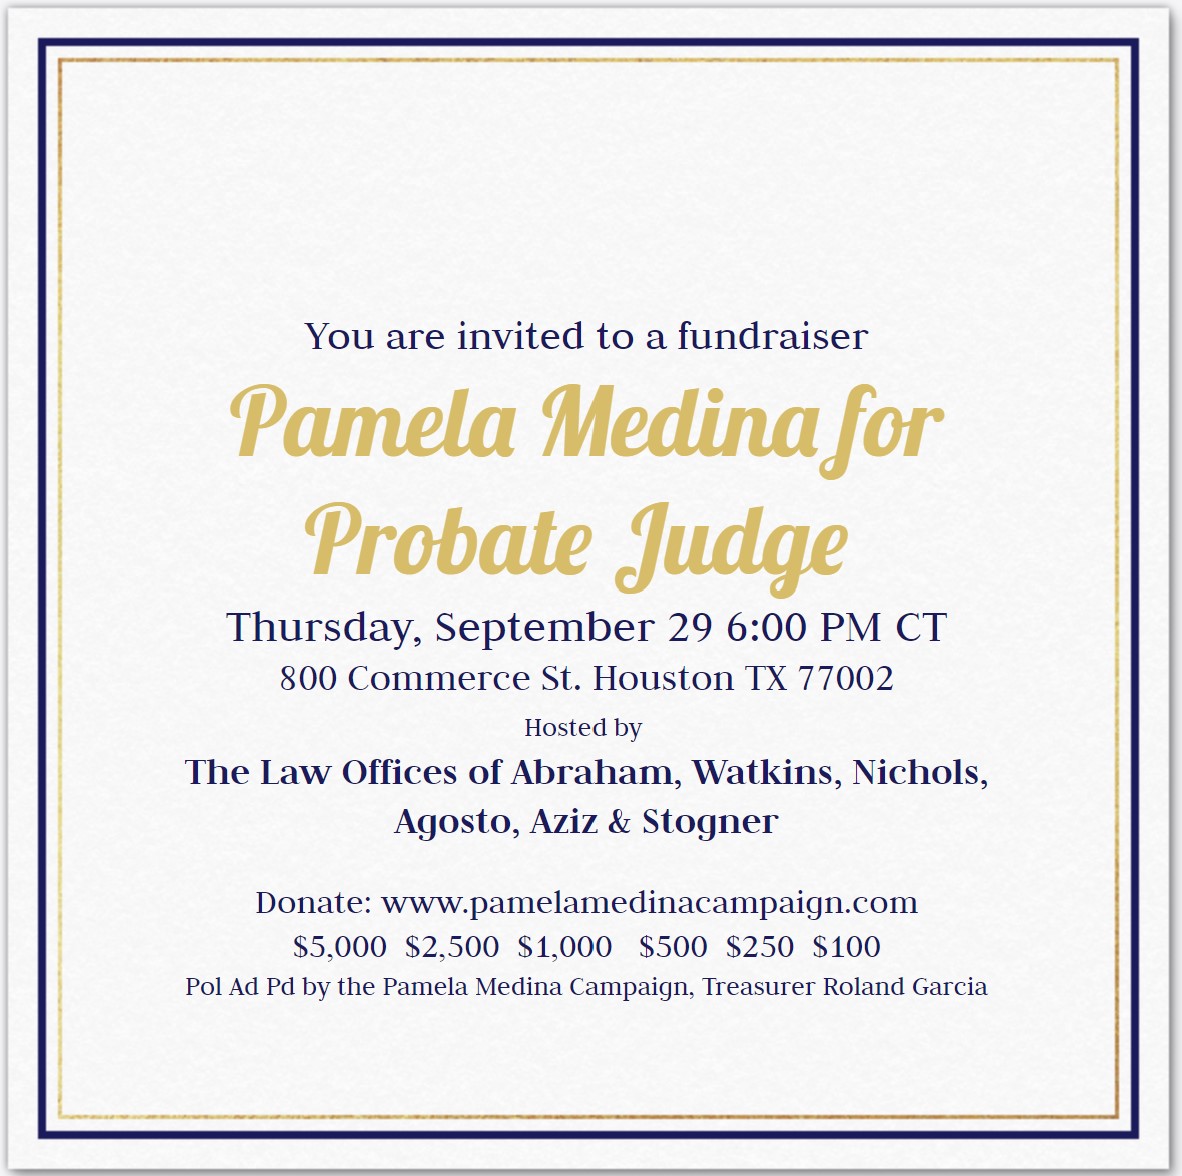 Pamela Medina Campaign Event